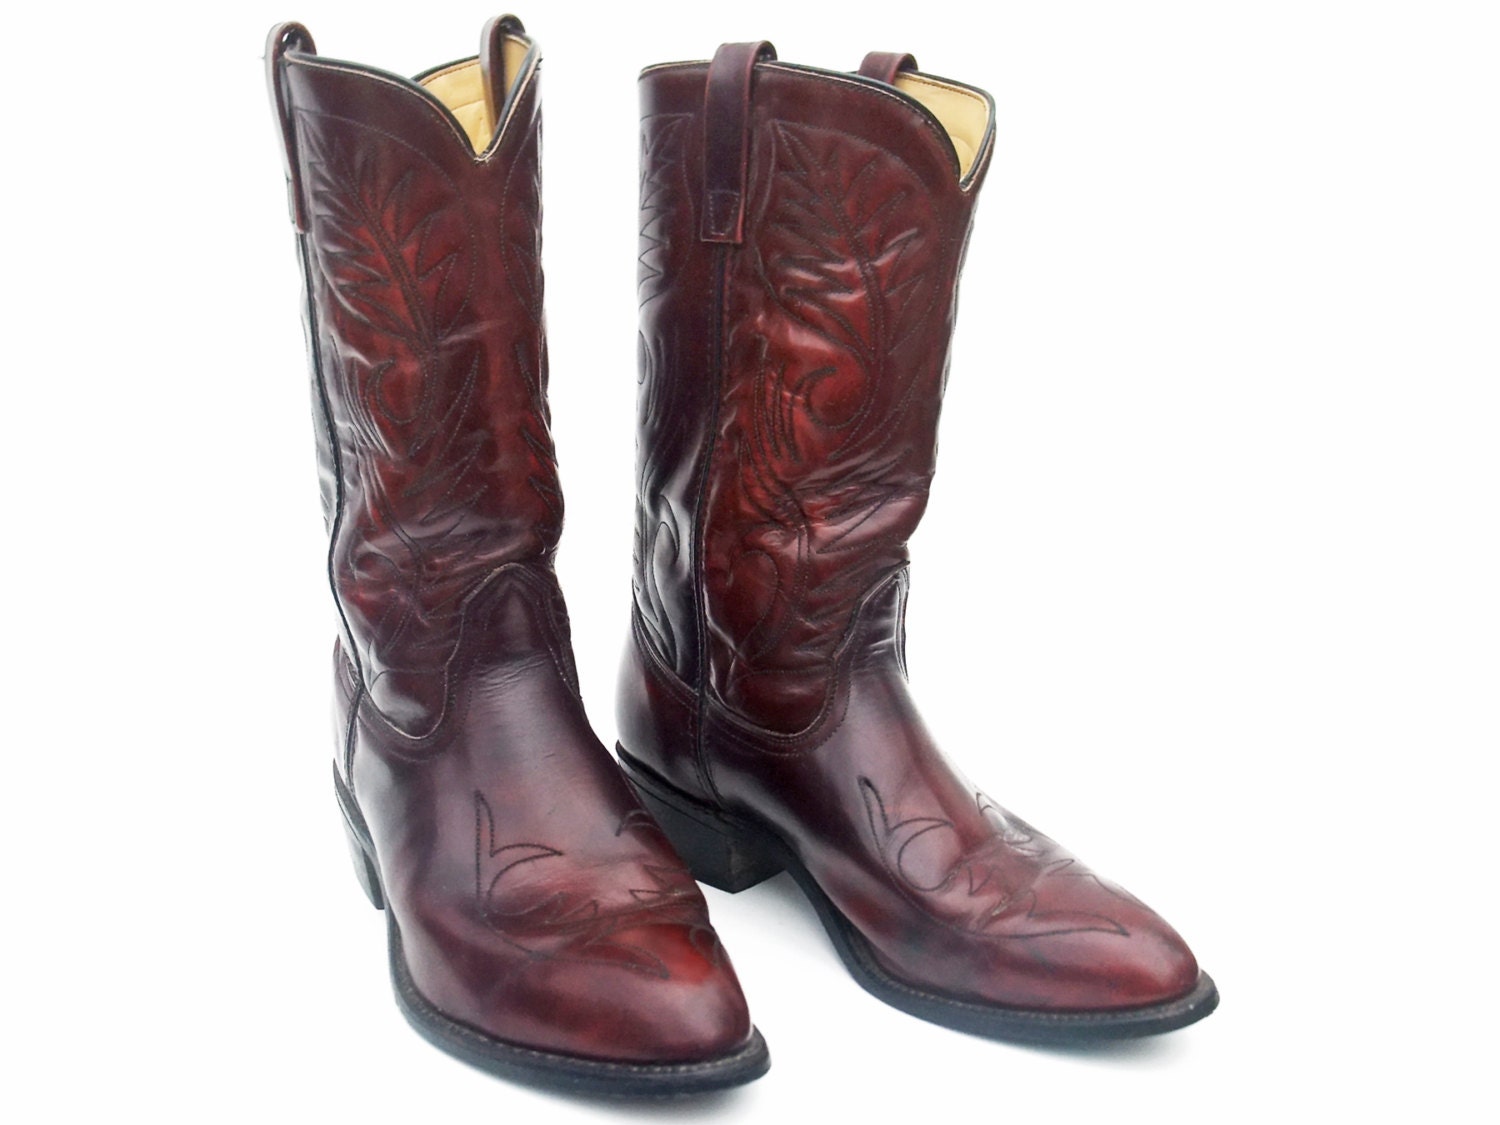 Vintage Cowboy Boots Men's Size 11 Burgundy Leather Pull